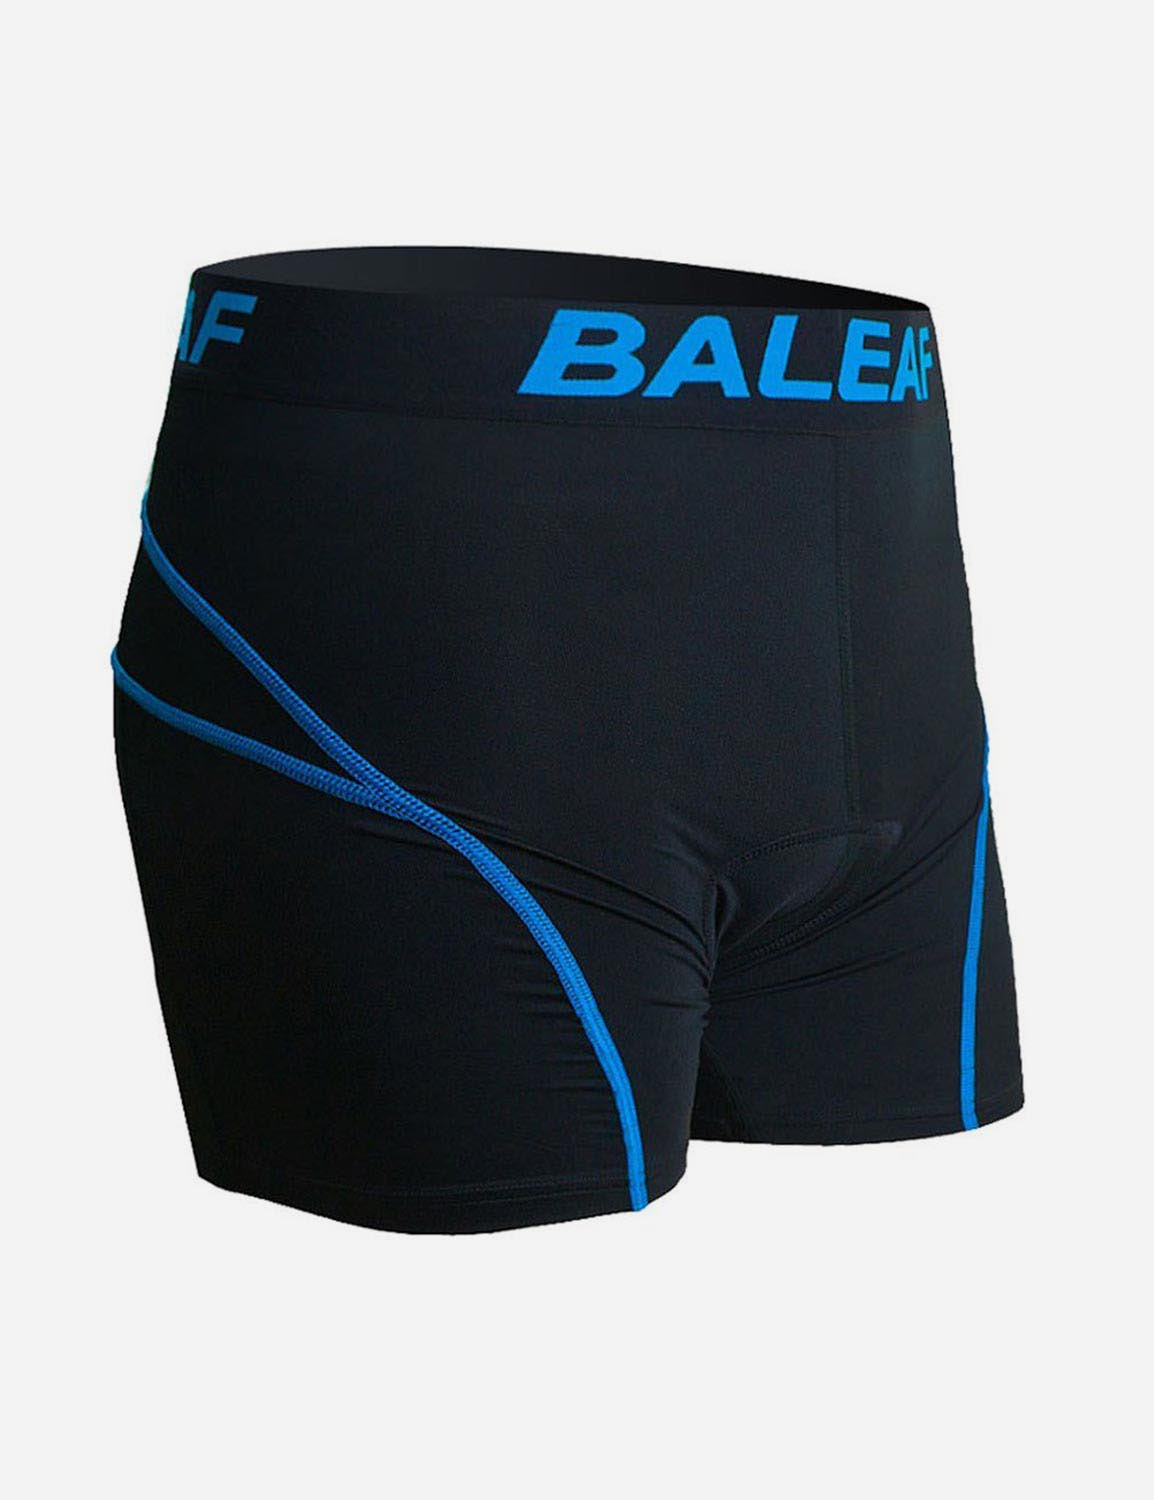 BALEAF Women's Cycling Underwear 3D Padded Bike Shorts Road Biking Bicycle  Brief